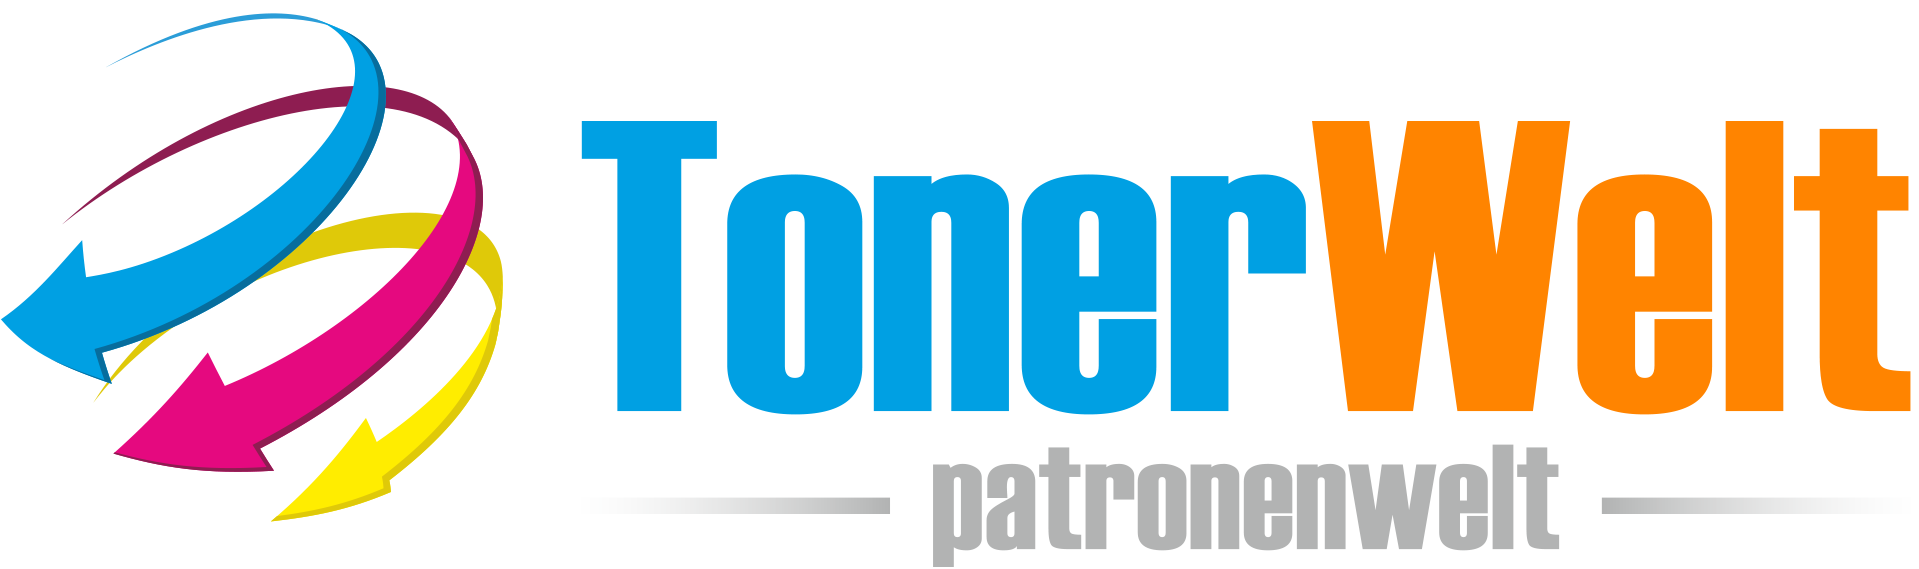 tonerwelt-footer-logo